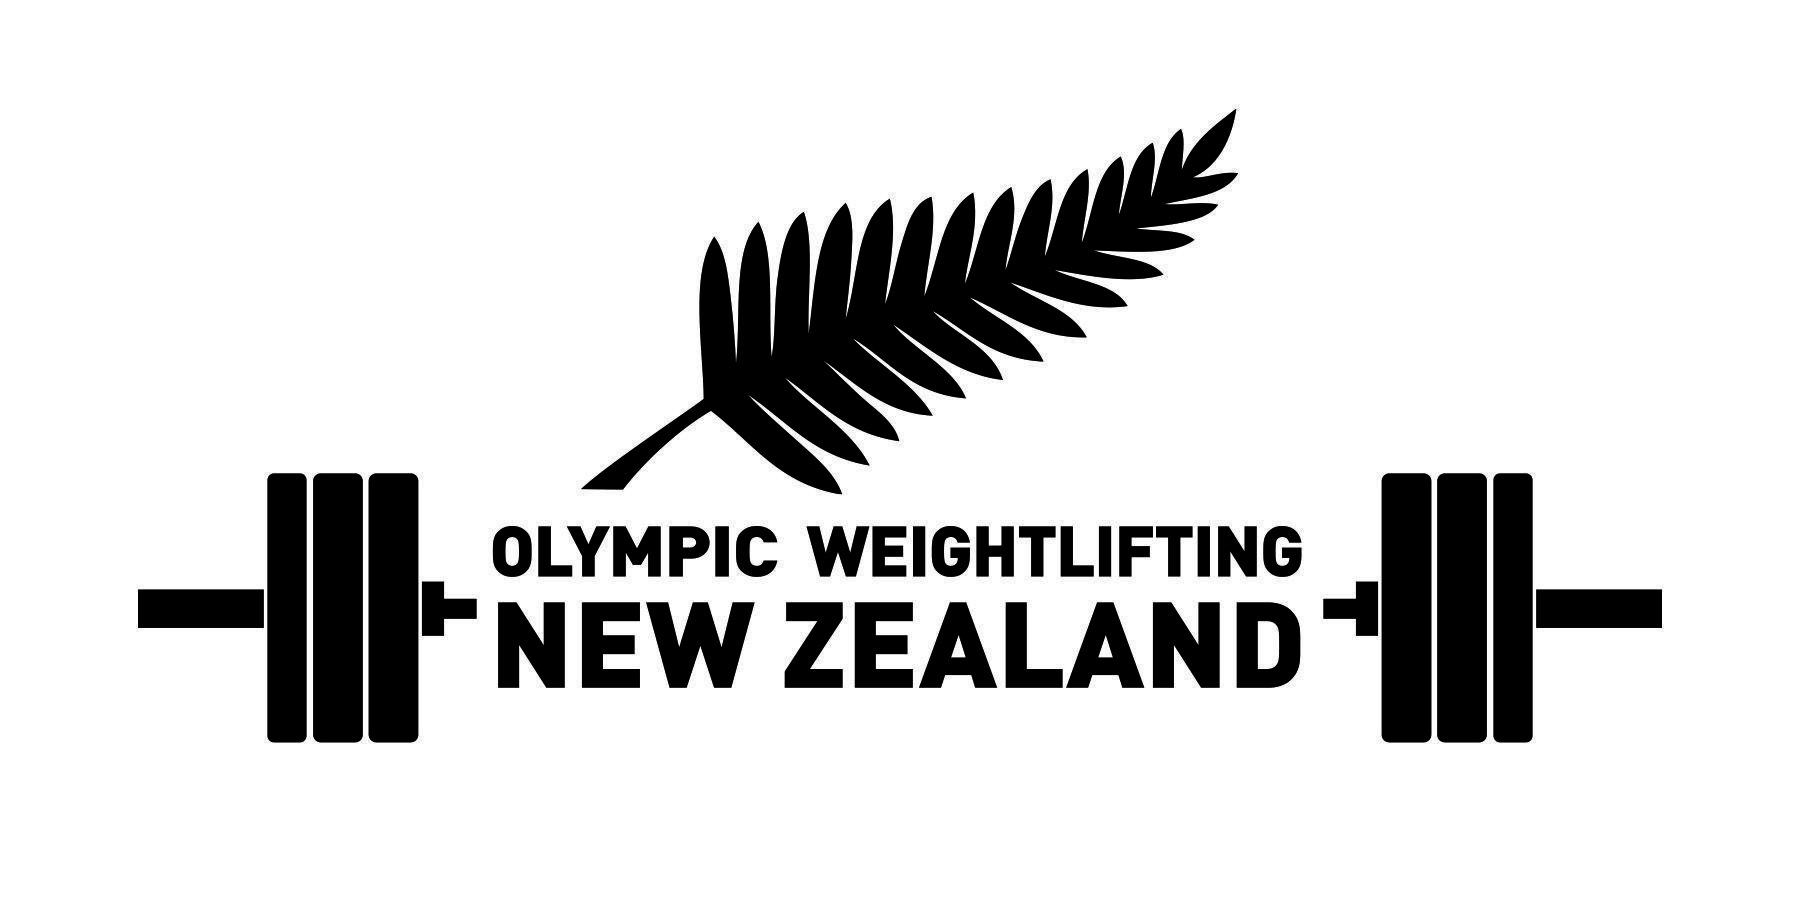 Weightlifting Logo - OWNZ logo download. Olympic Weightlifting New Zealand